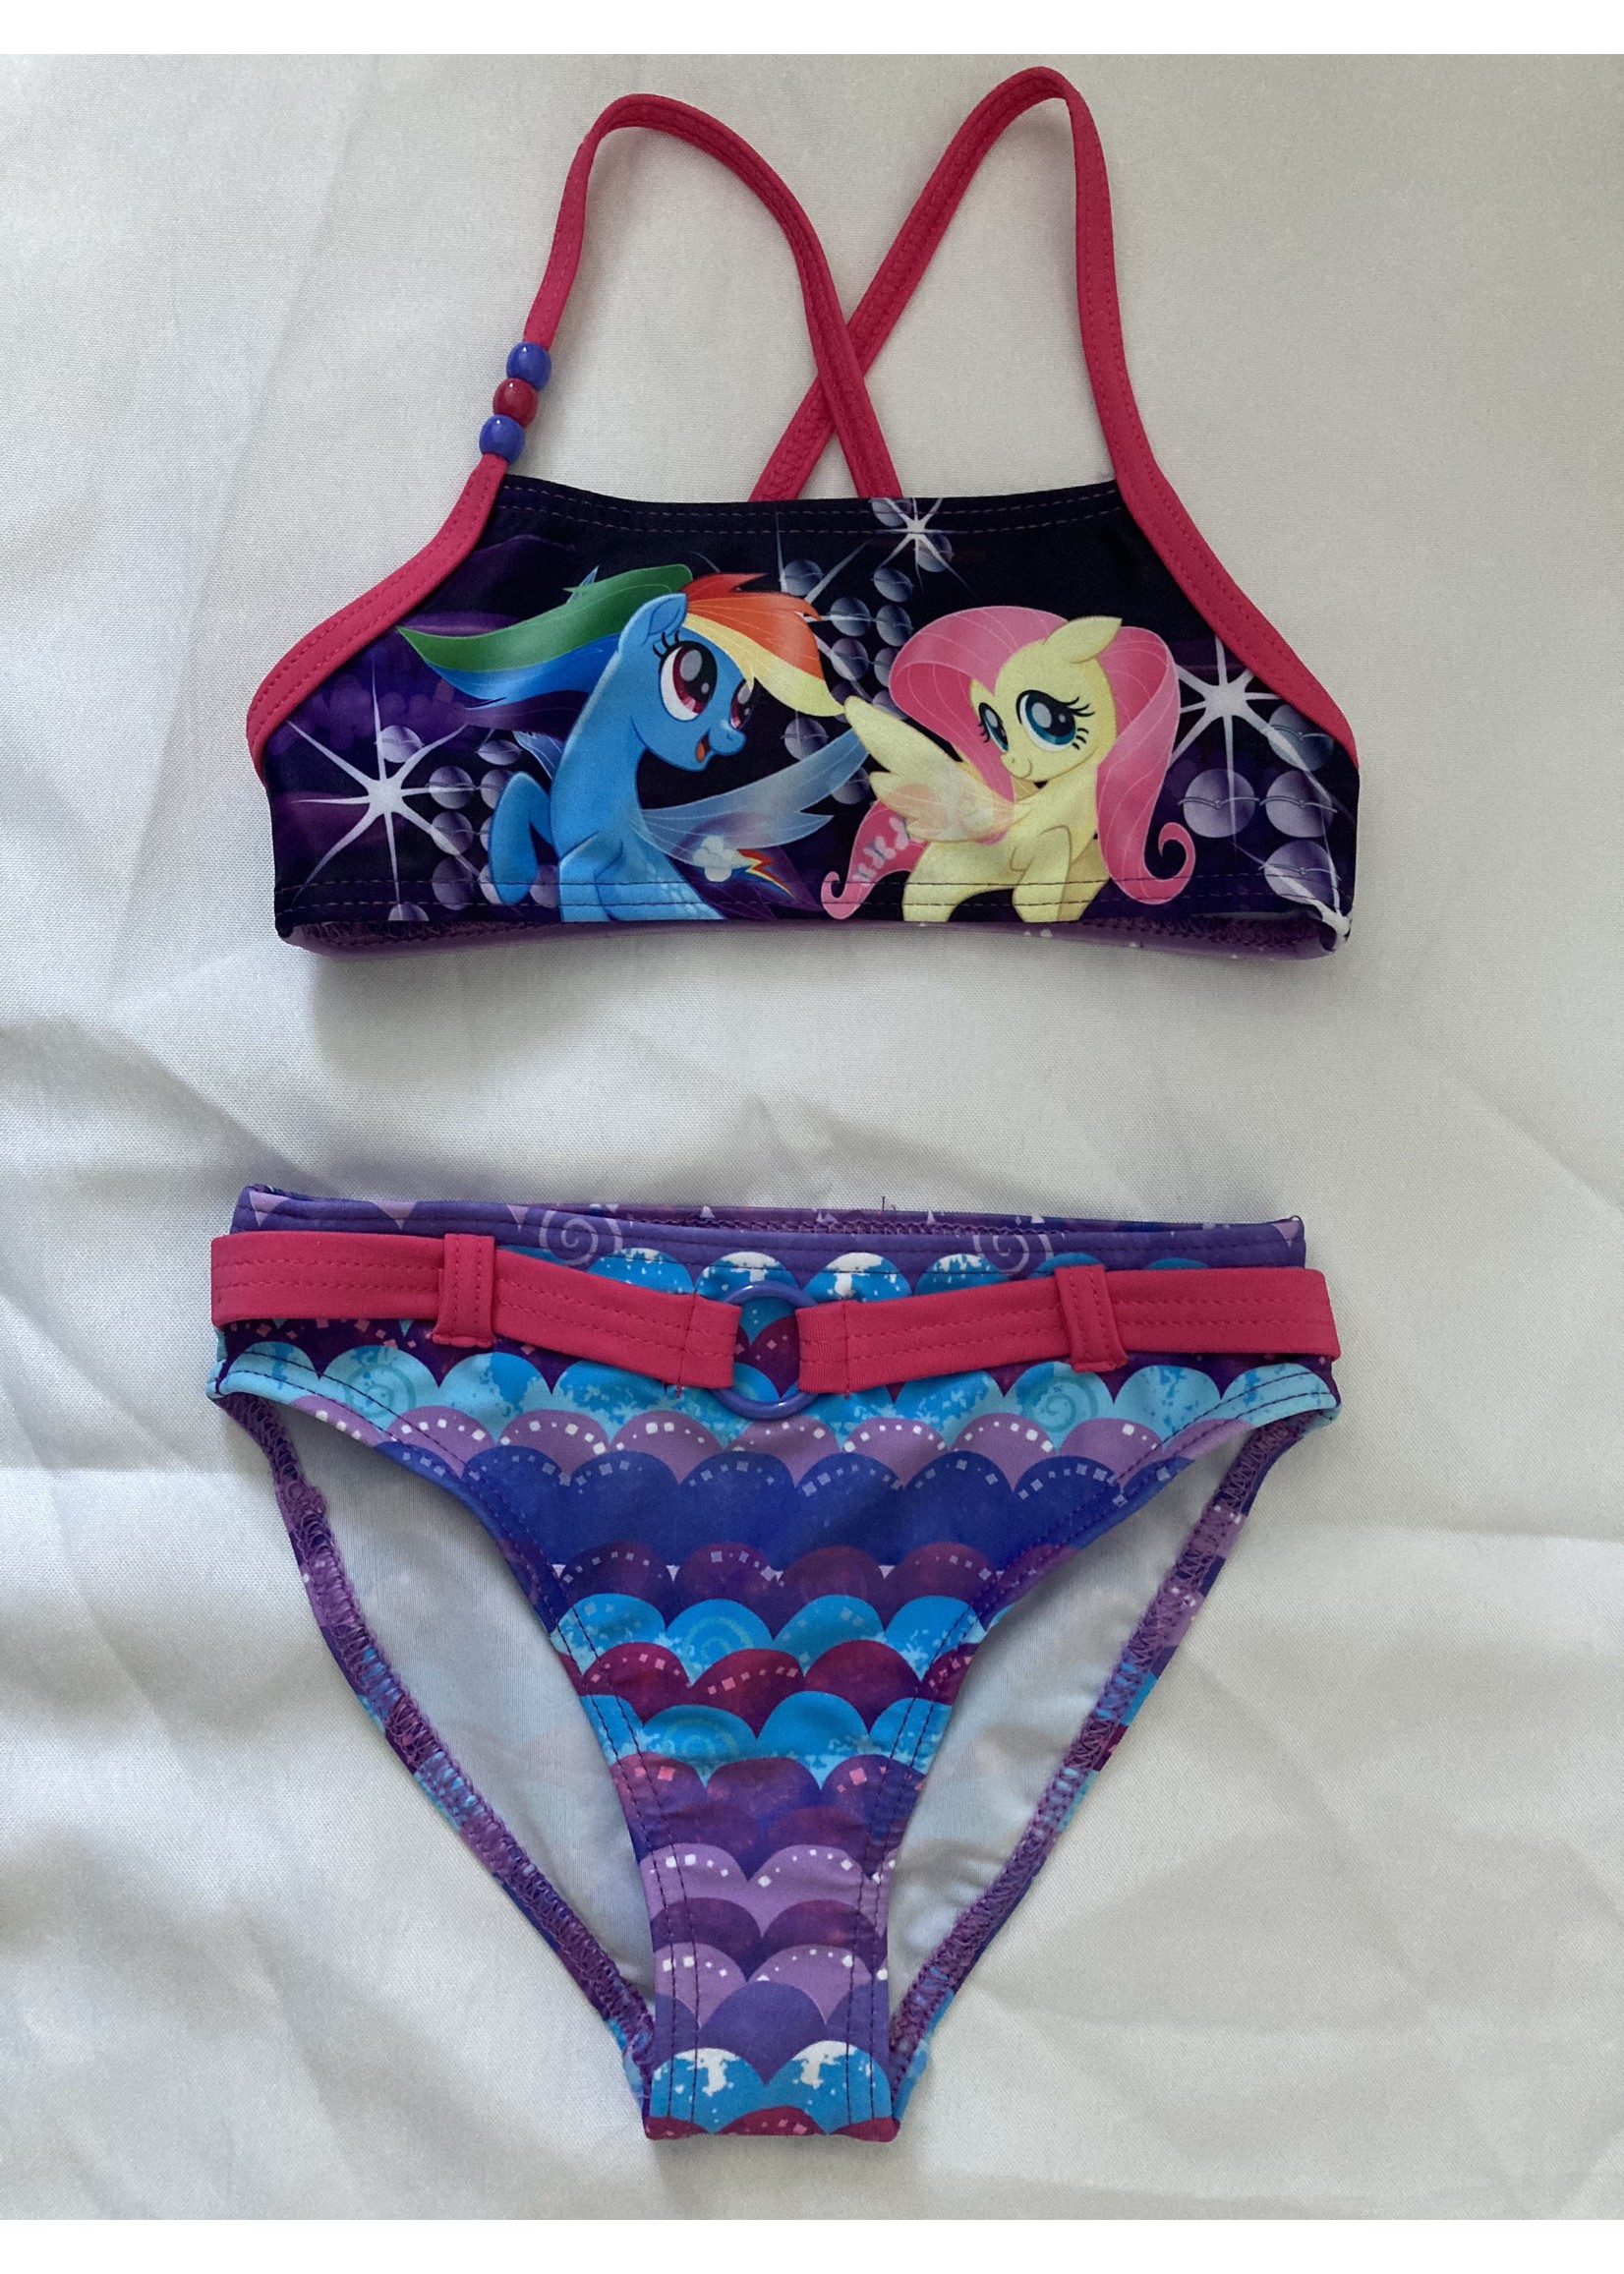 Bikini from My Little Pony Purple